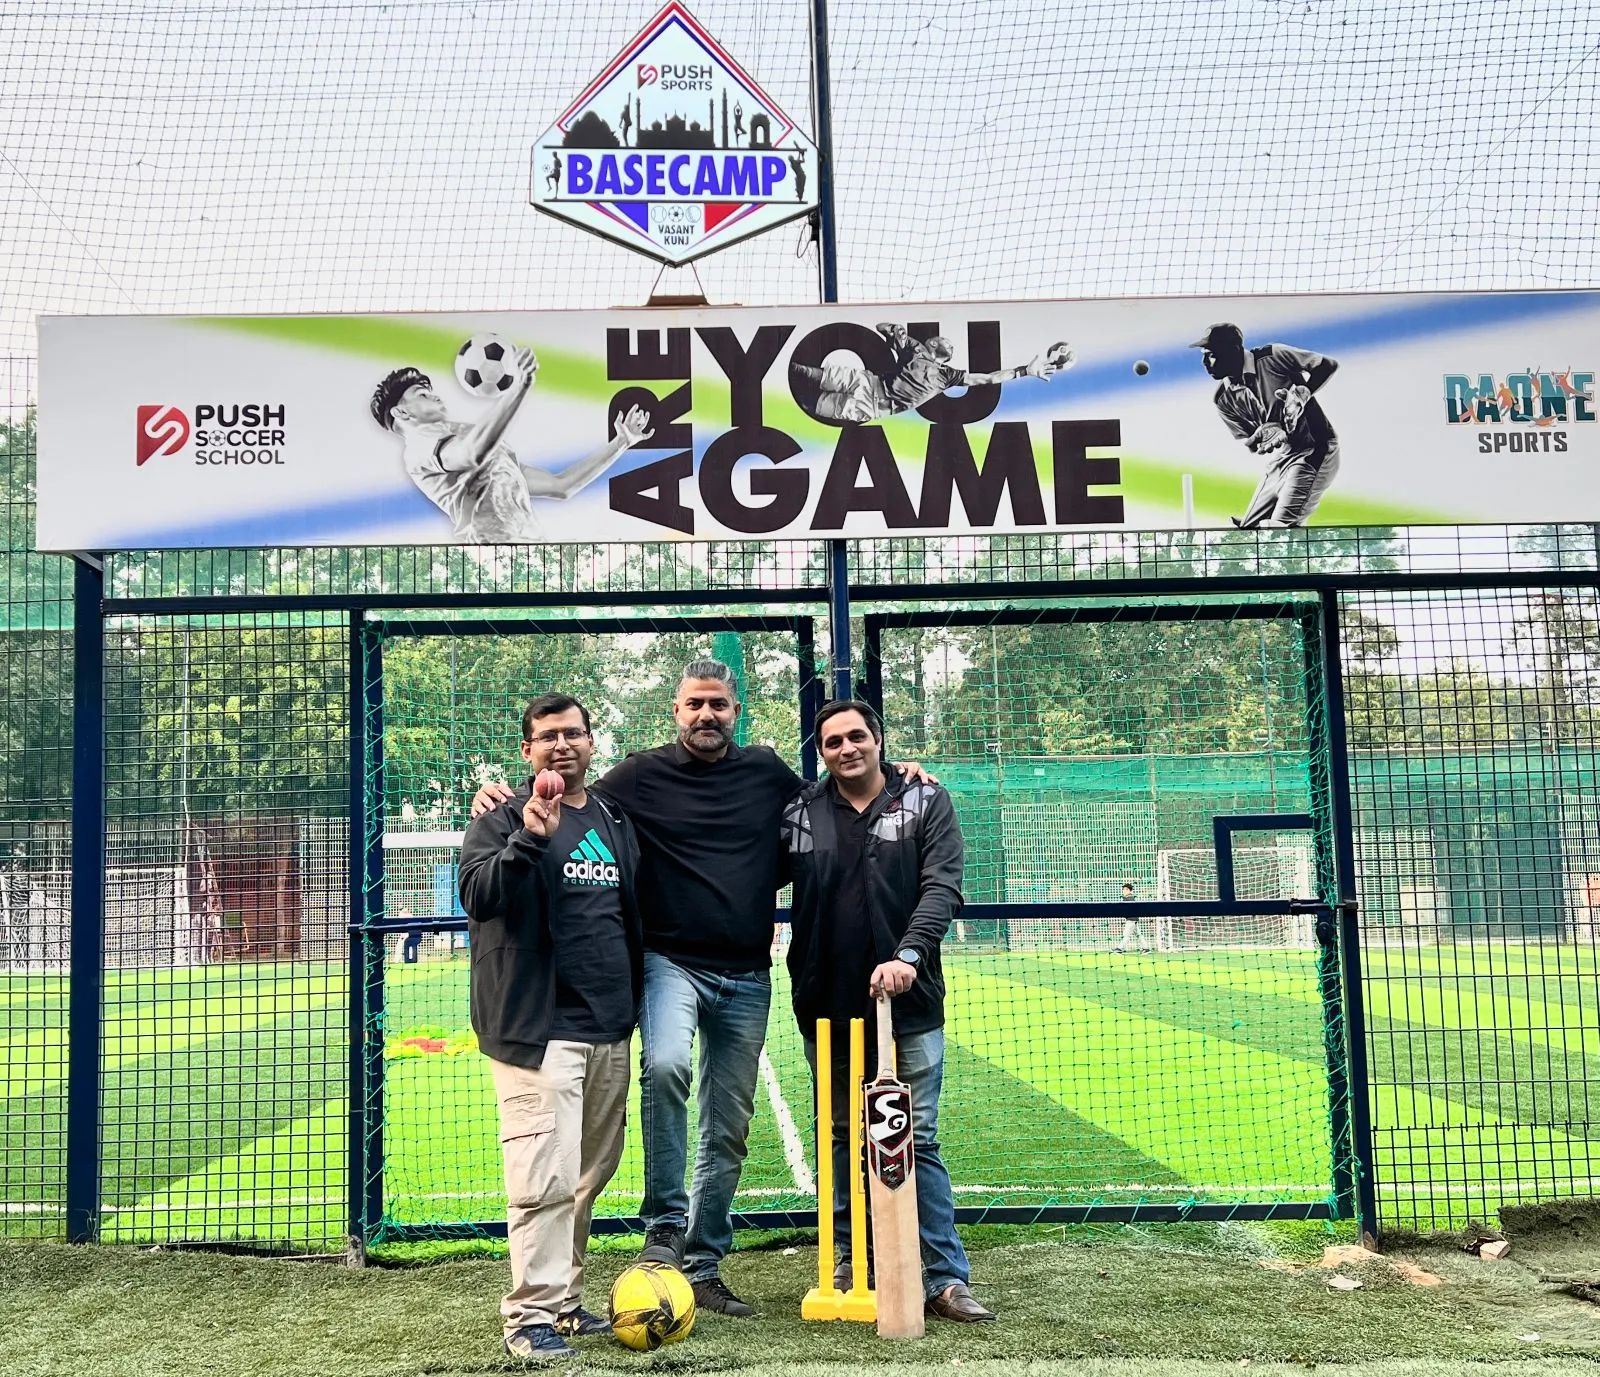  Puru Singh, Nitin Pahuja and Mukul Grove - Co-founders Push Sports